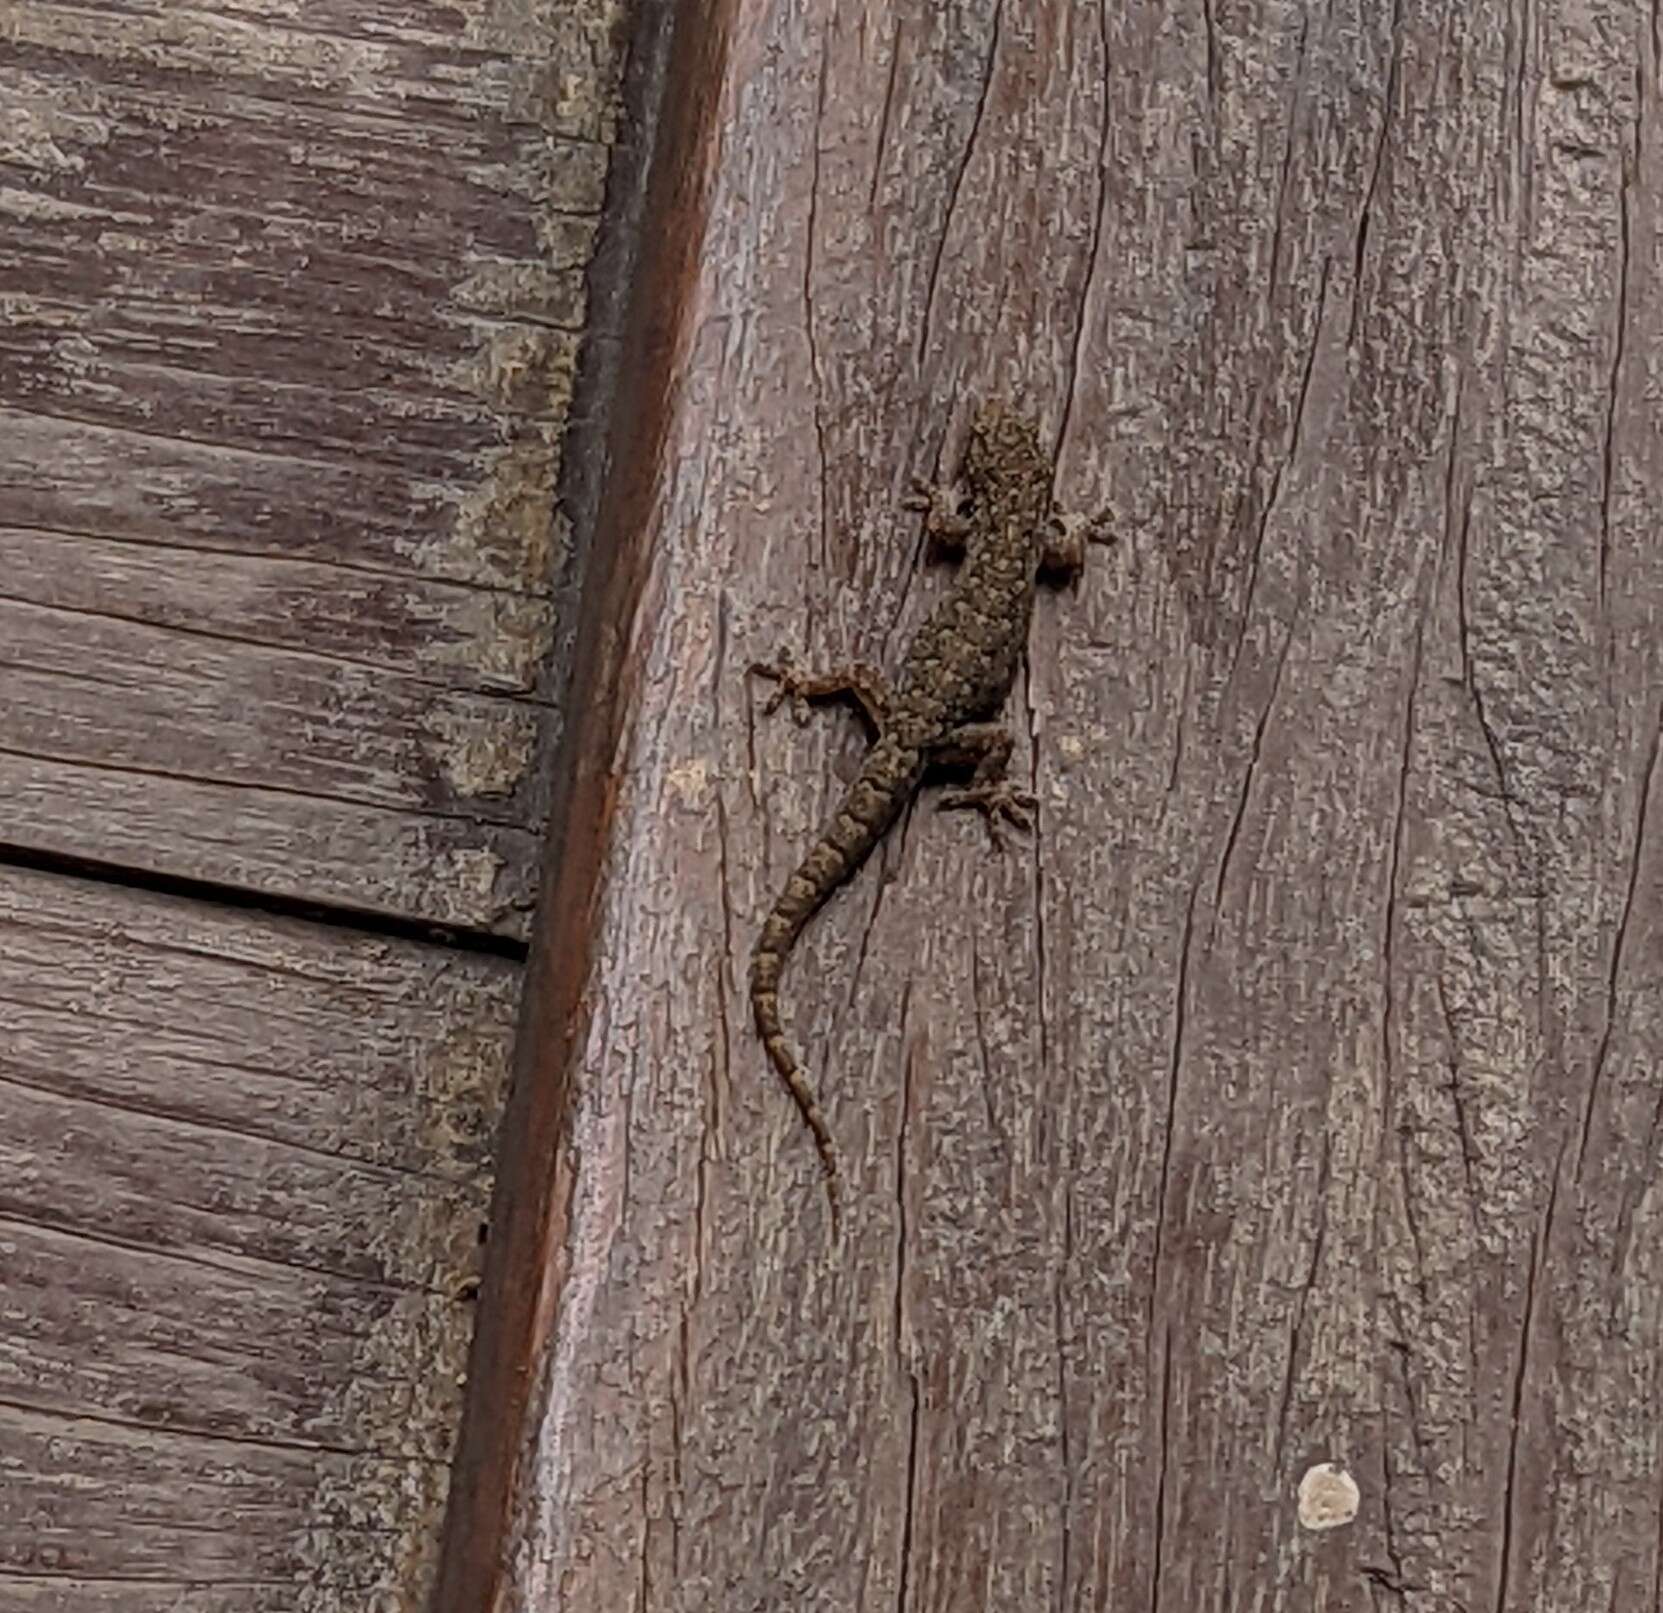 Image of Oriental Leaf-toed Gecko